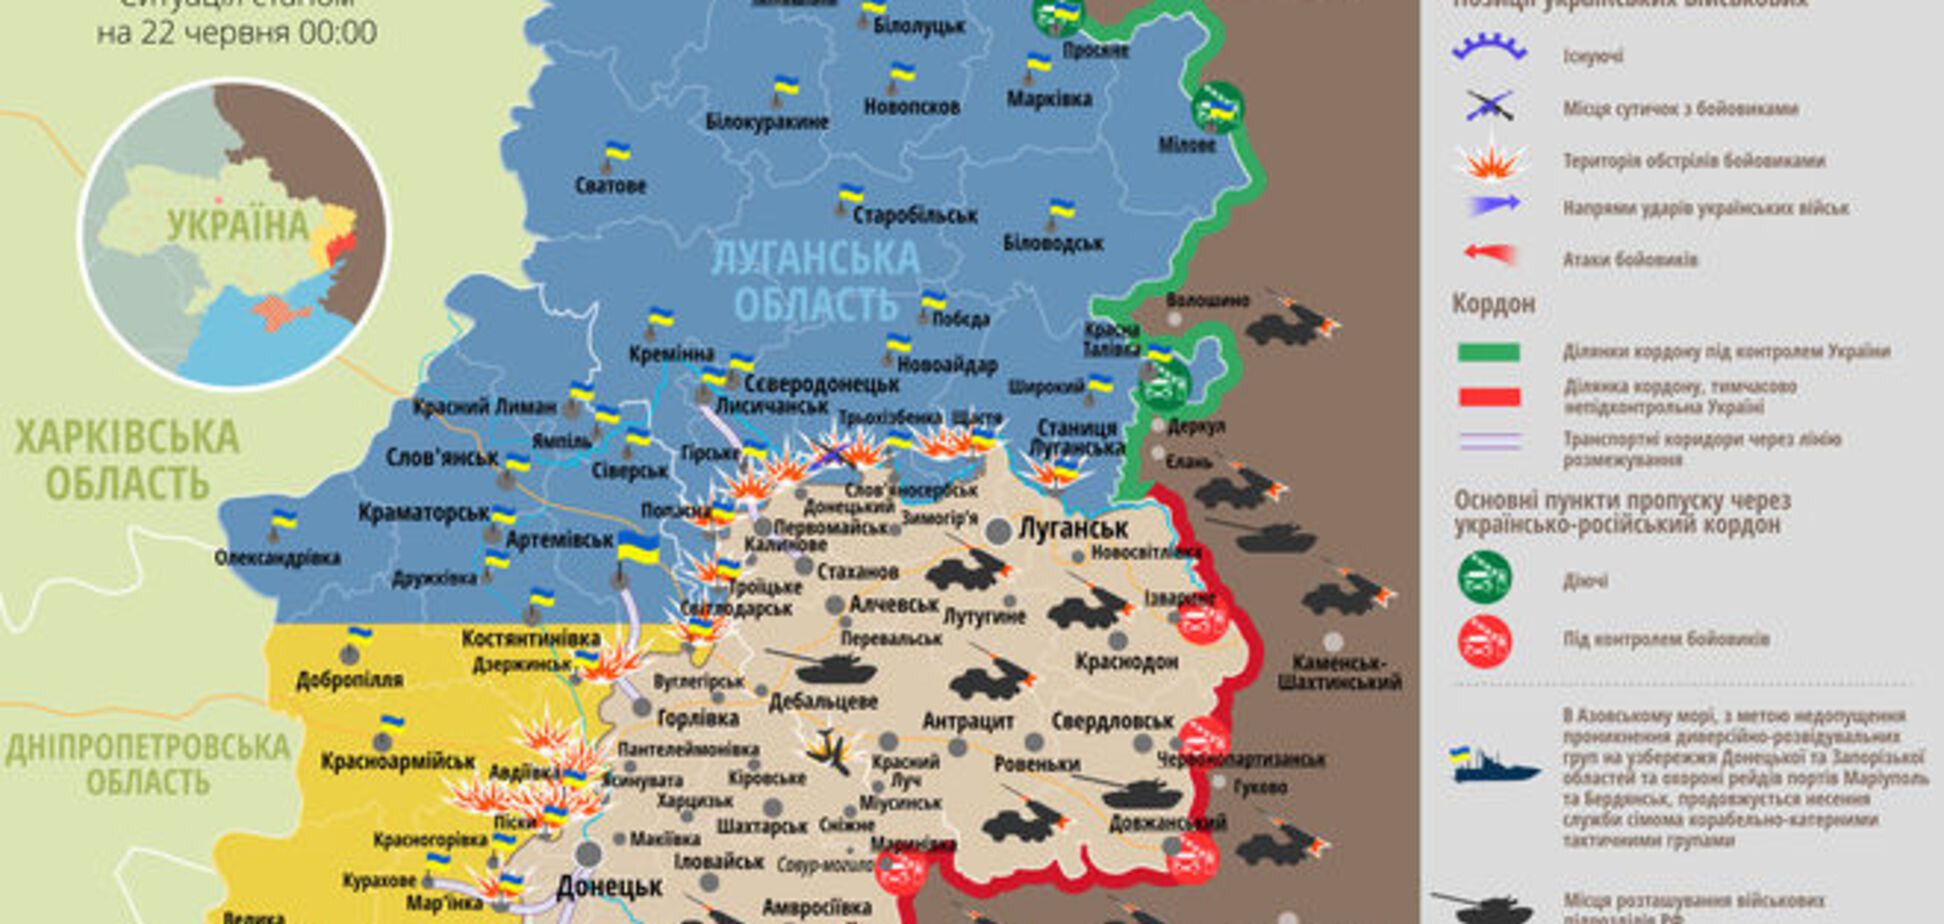 Терористи зосередили вогонь на Донецькому напрямку: карта АТО